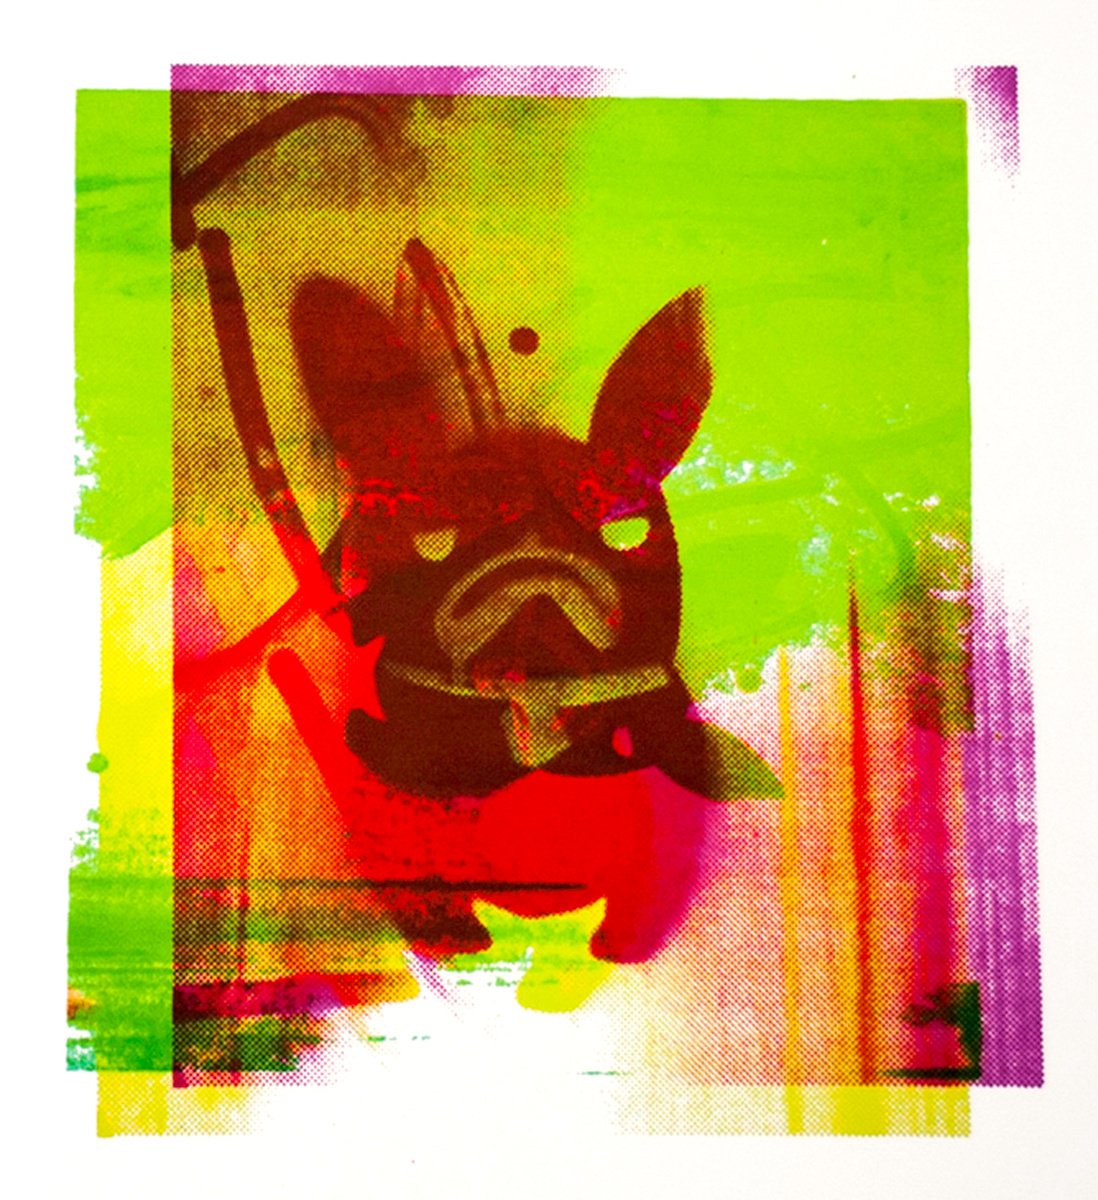 Buster (French Bulldog) by AH Image Maker